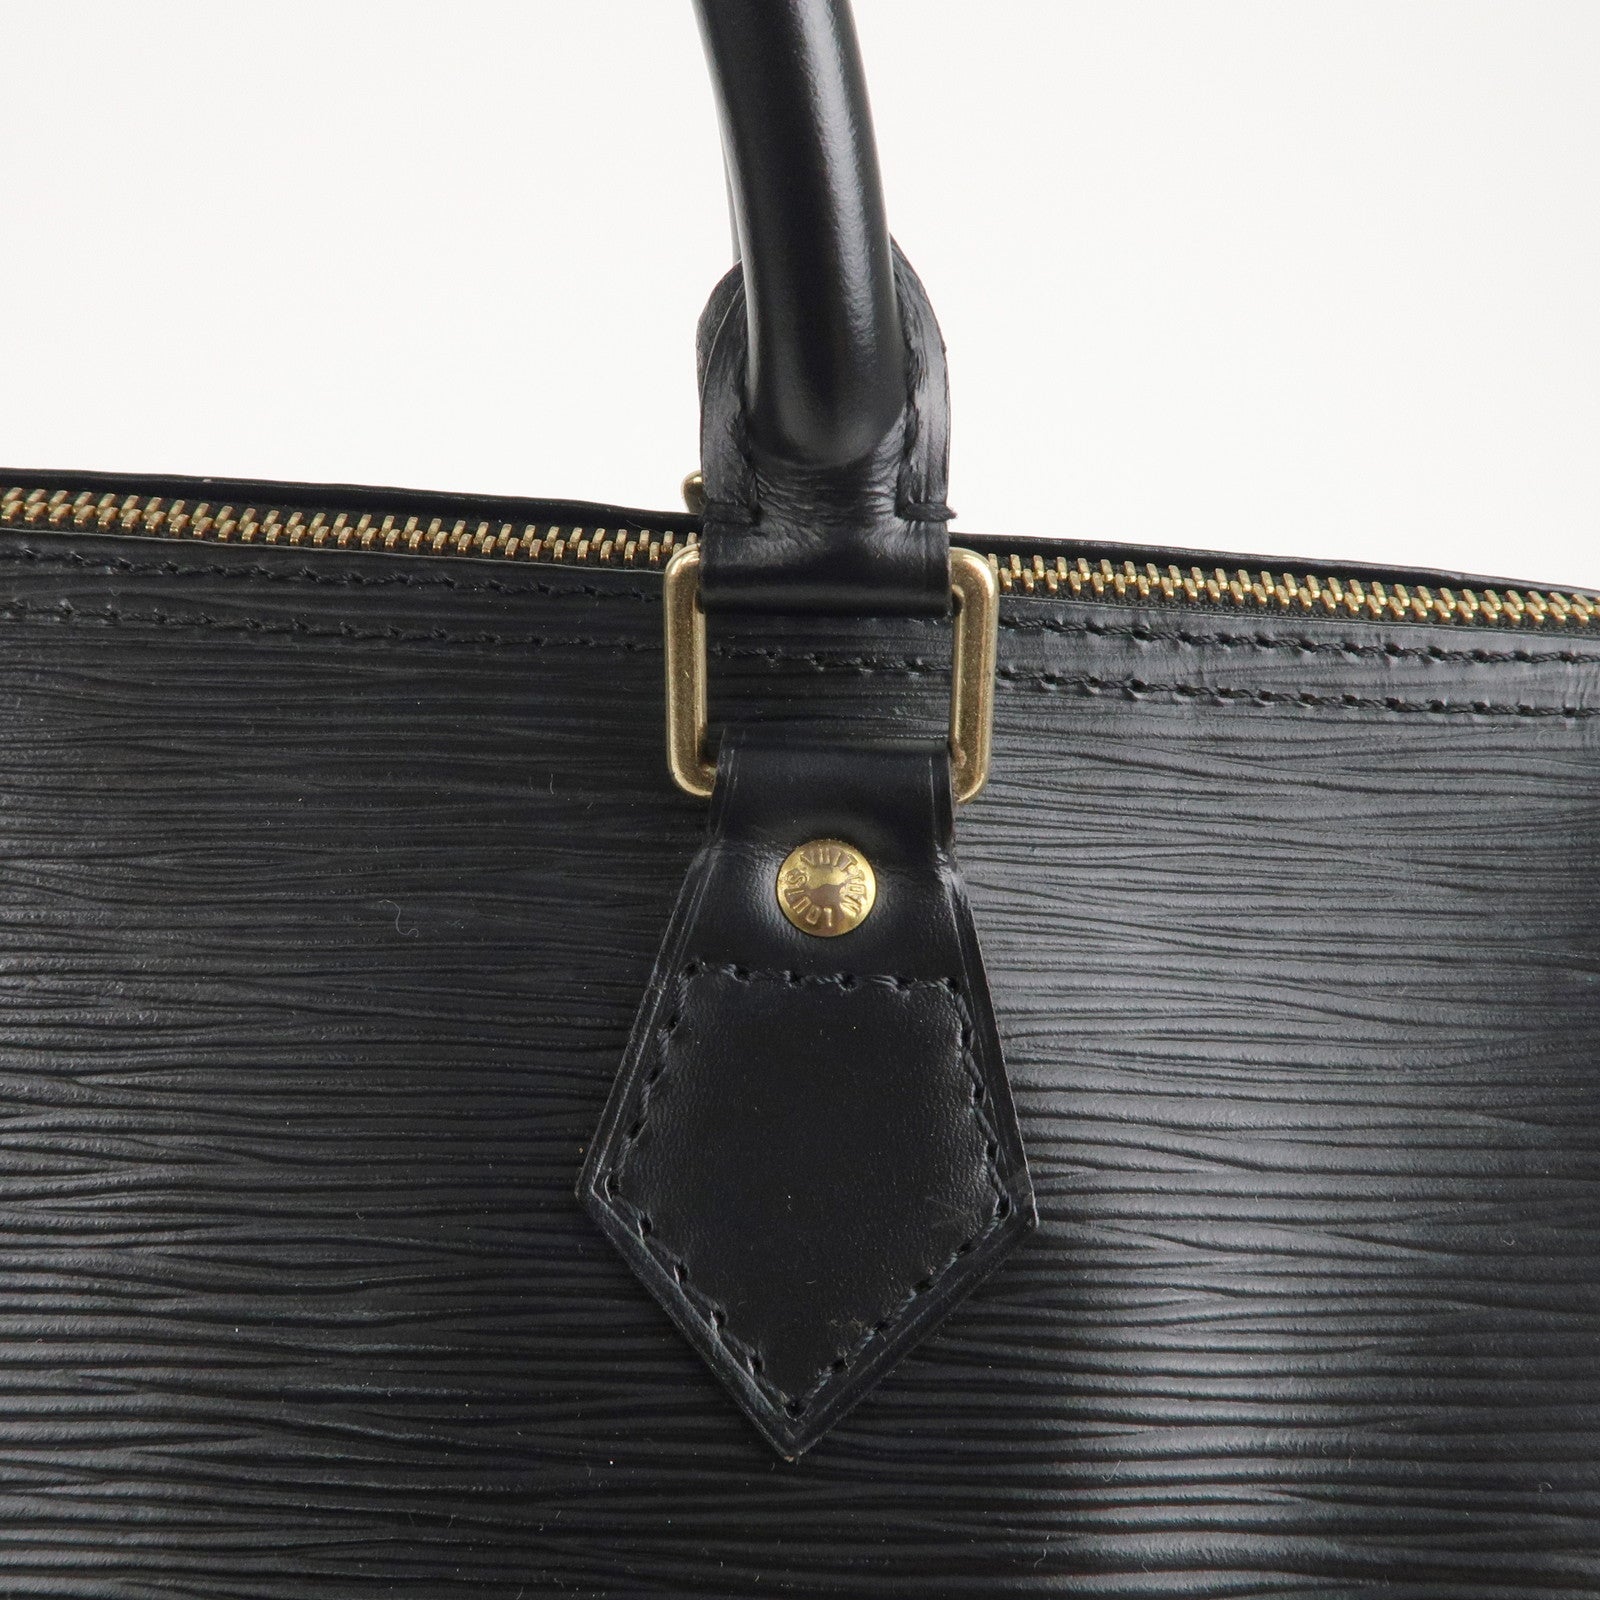 Louis Vuitton Black Epi Speedy 30 Handbag Louis Vuitton